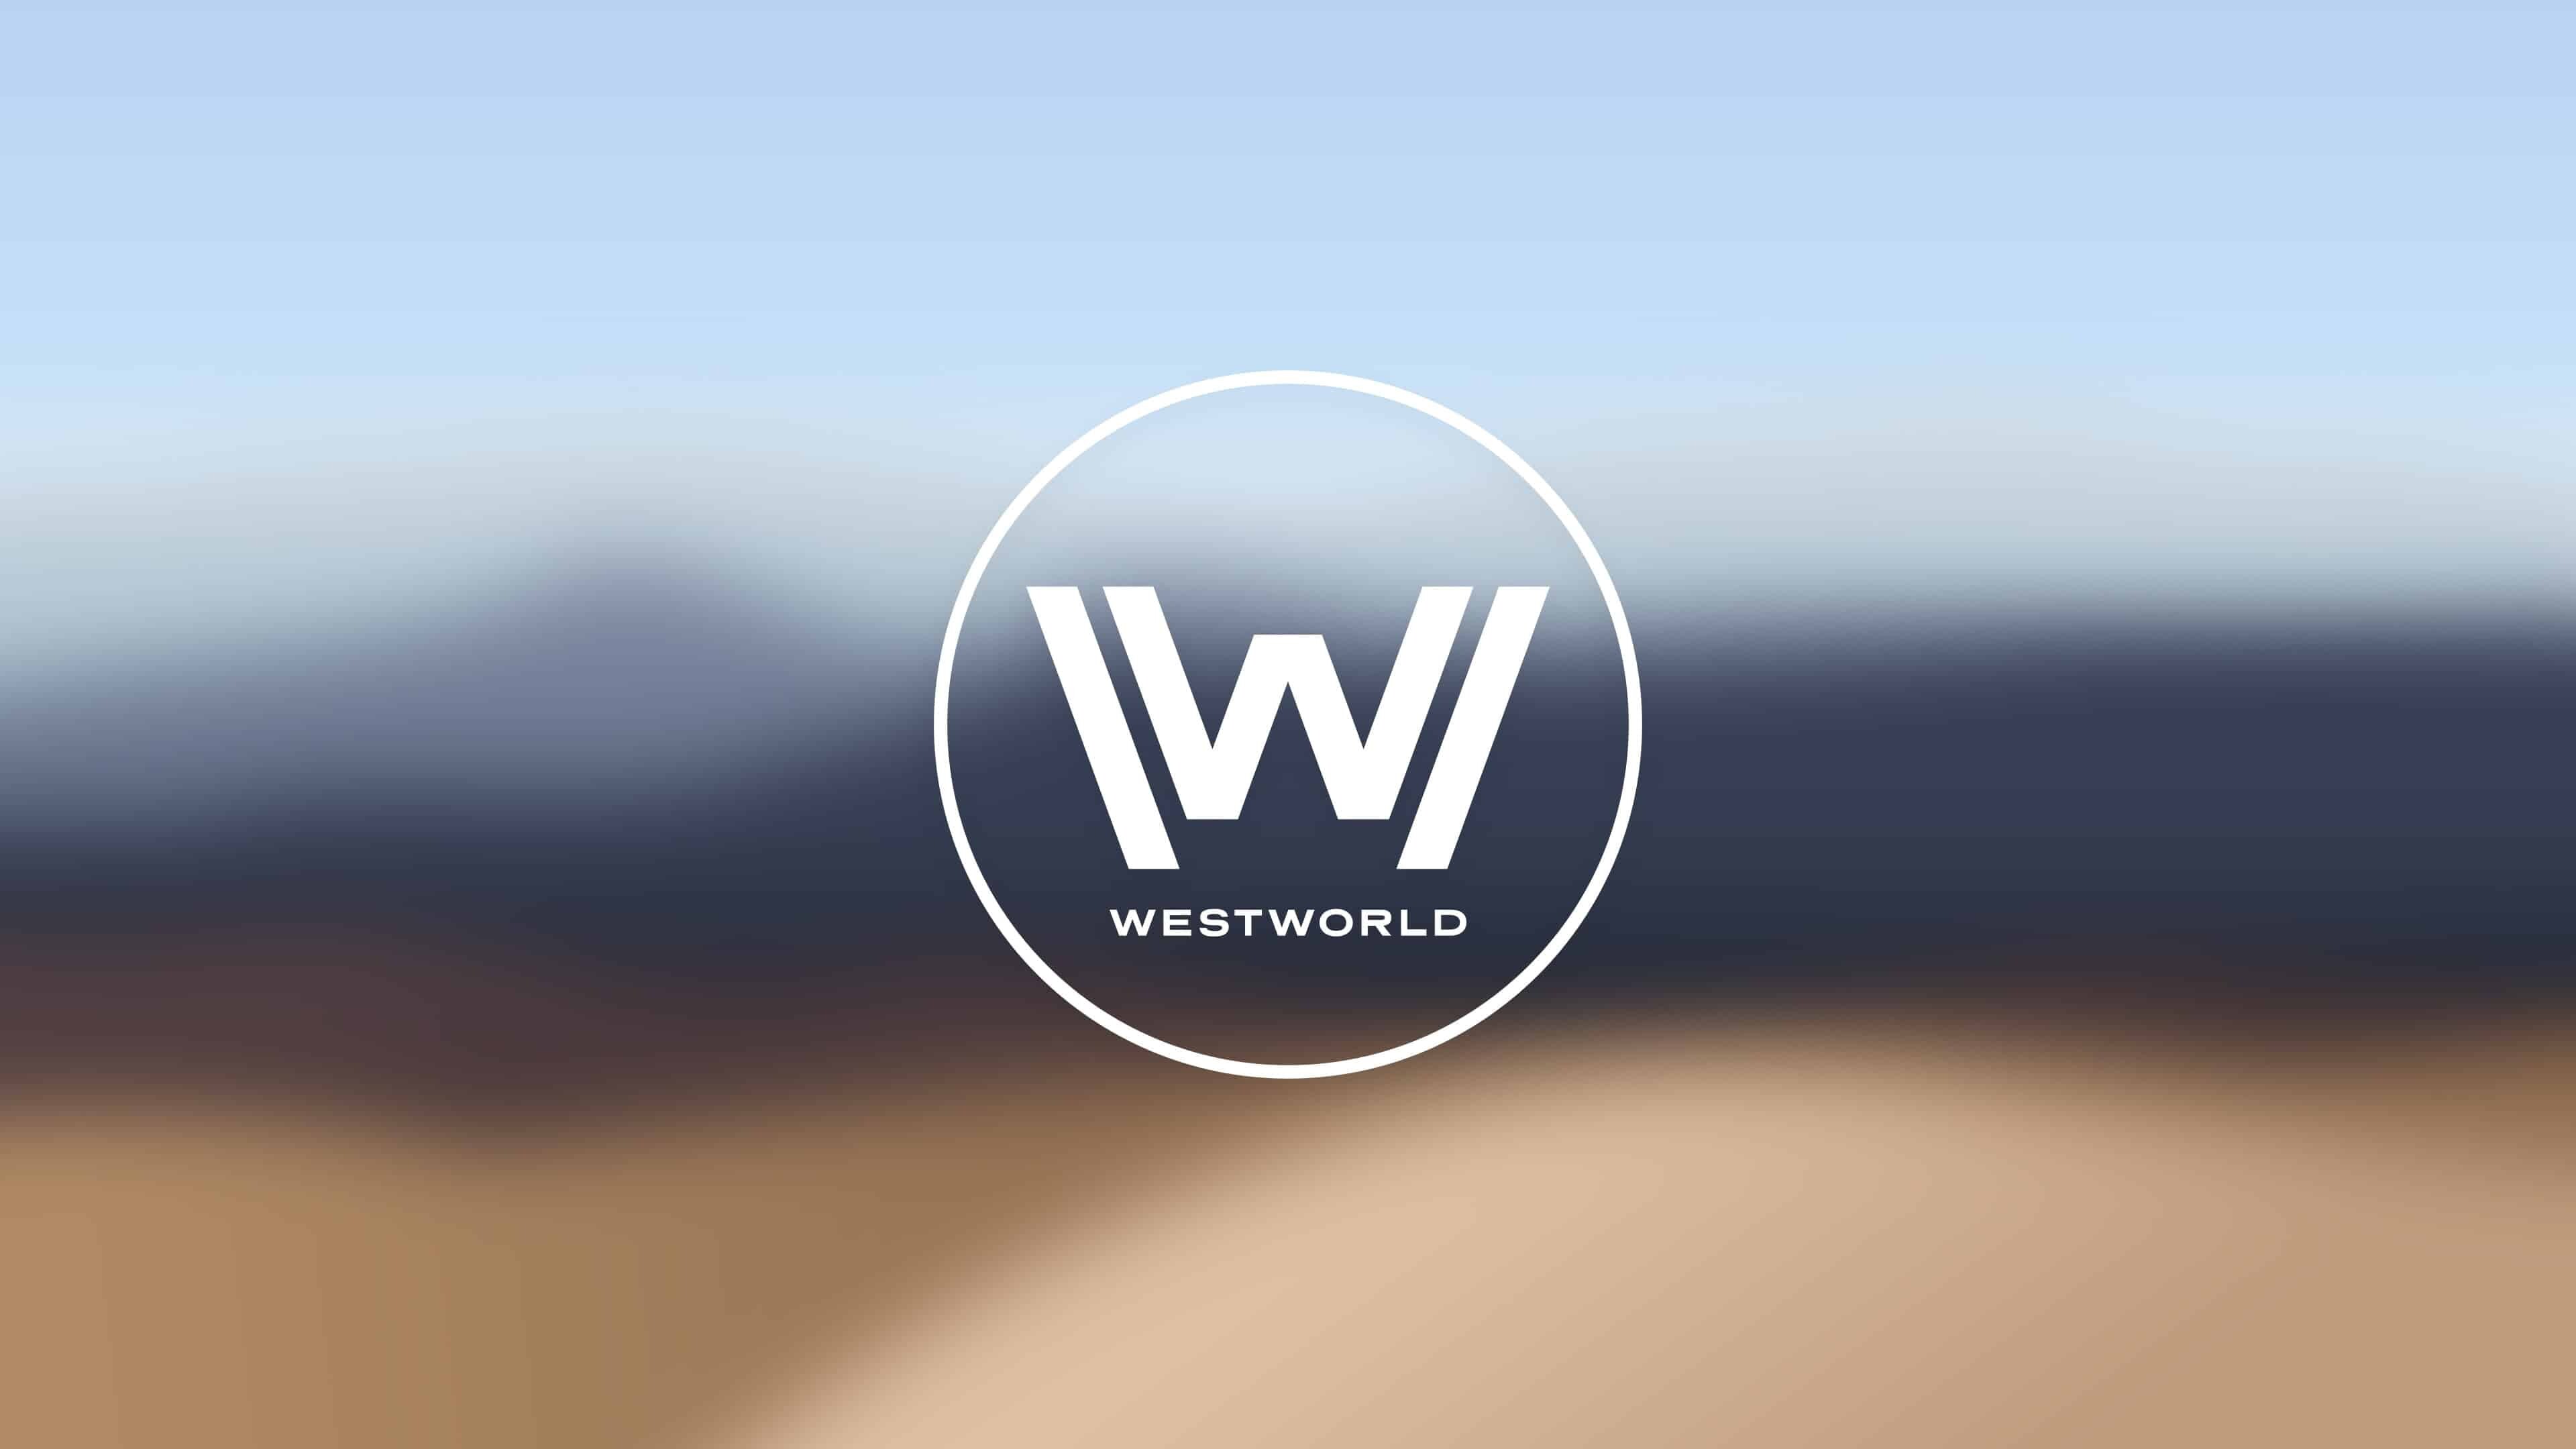 Westworld: Logo, TV series, Minimalist, Letter. 3840x2160 4K Wallpaper.